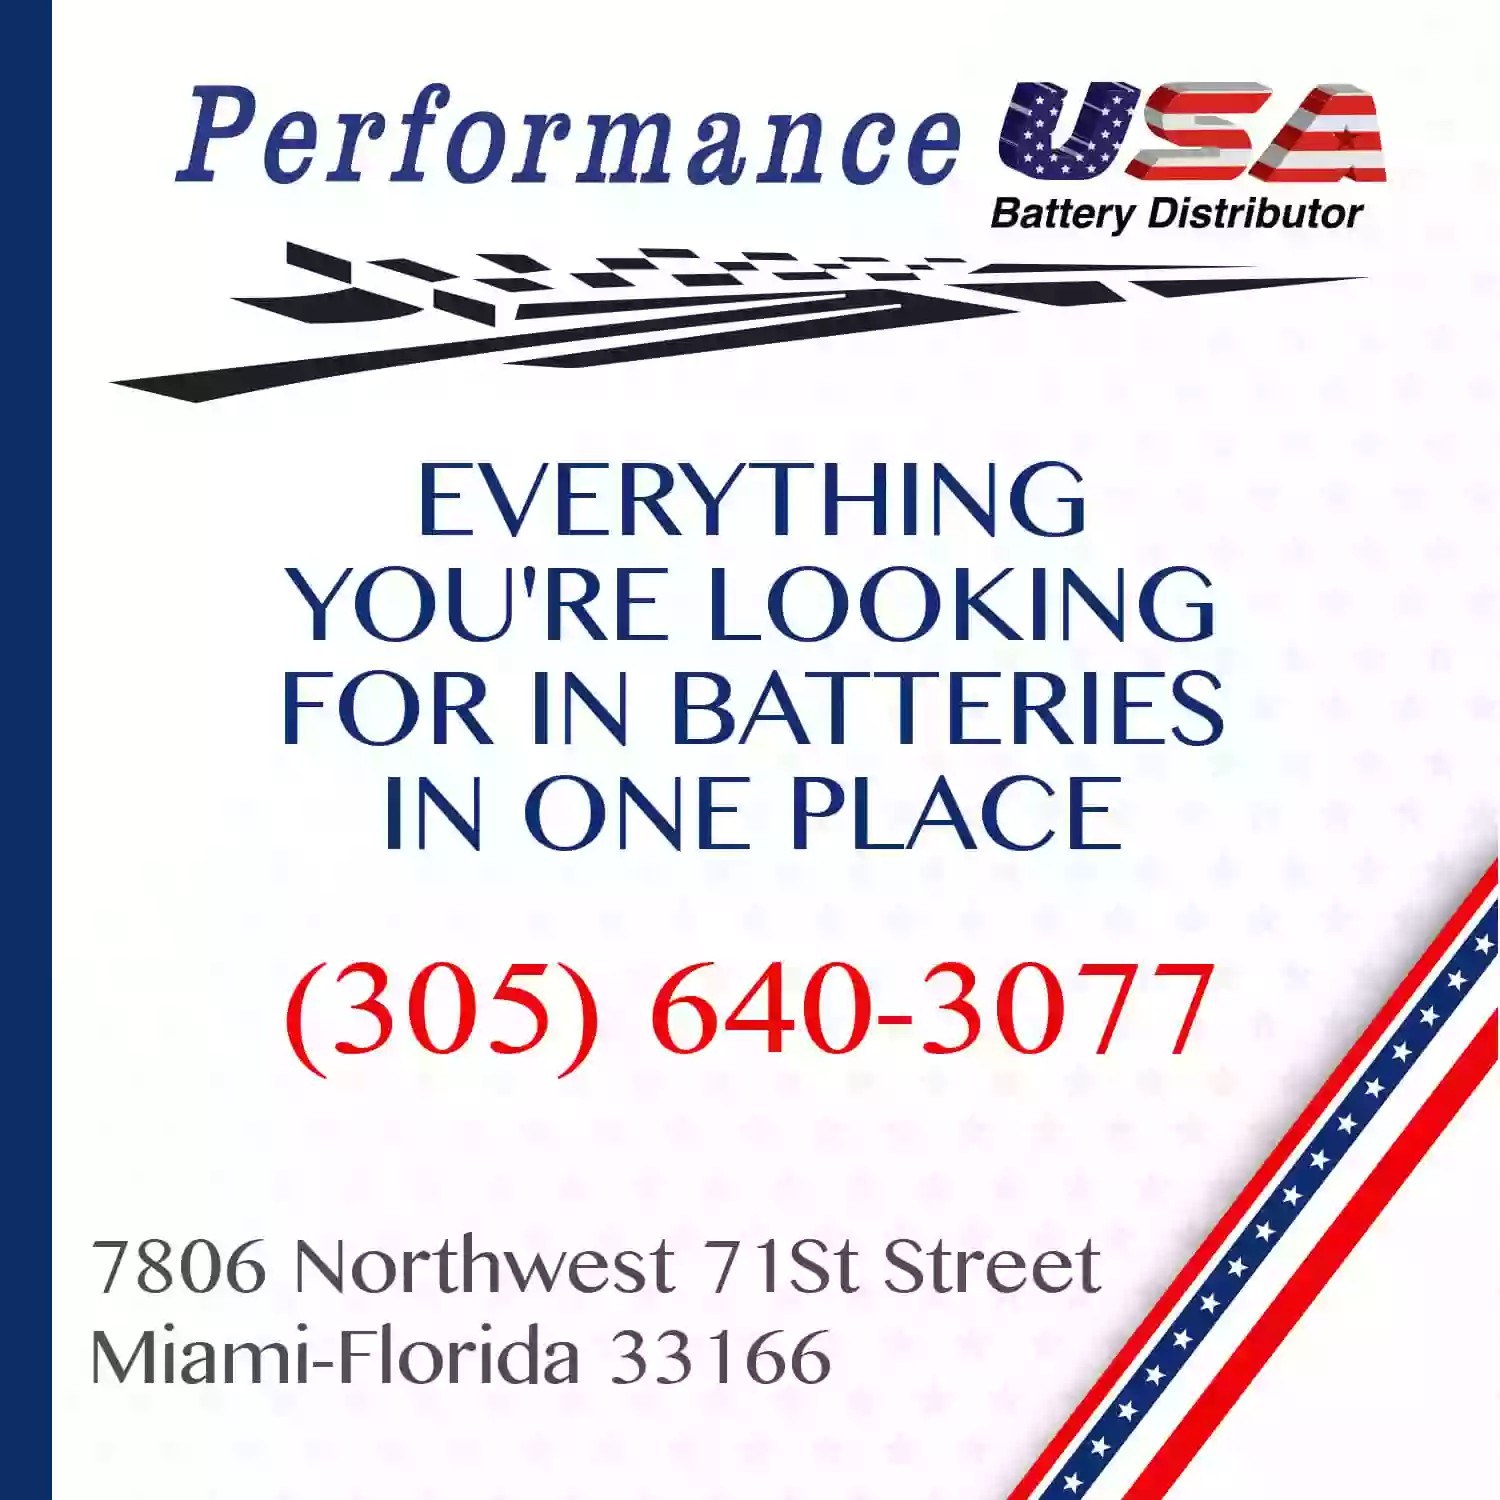 Performance USA Battery